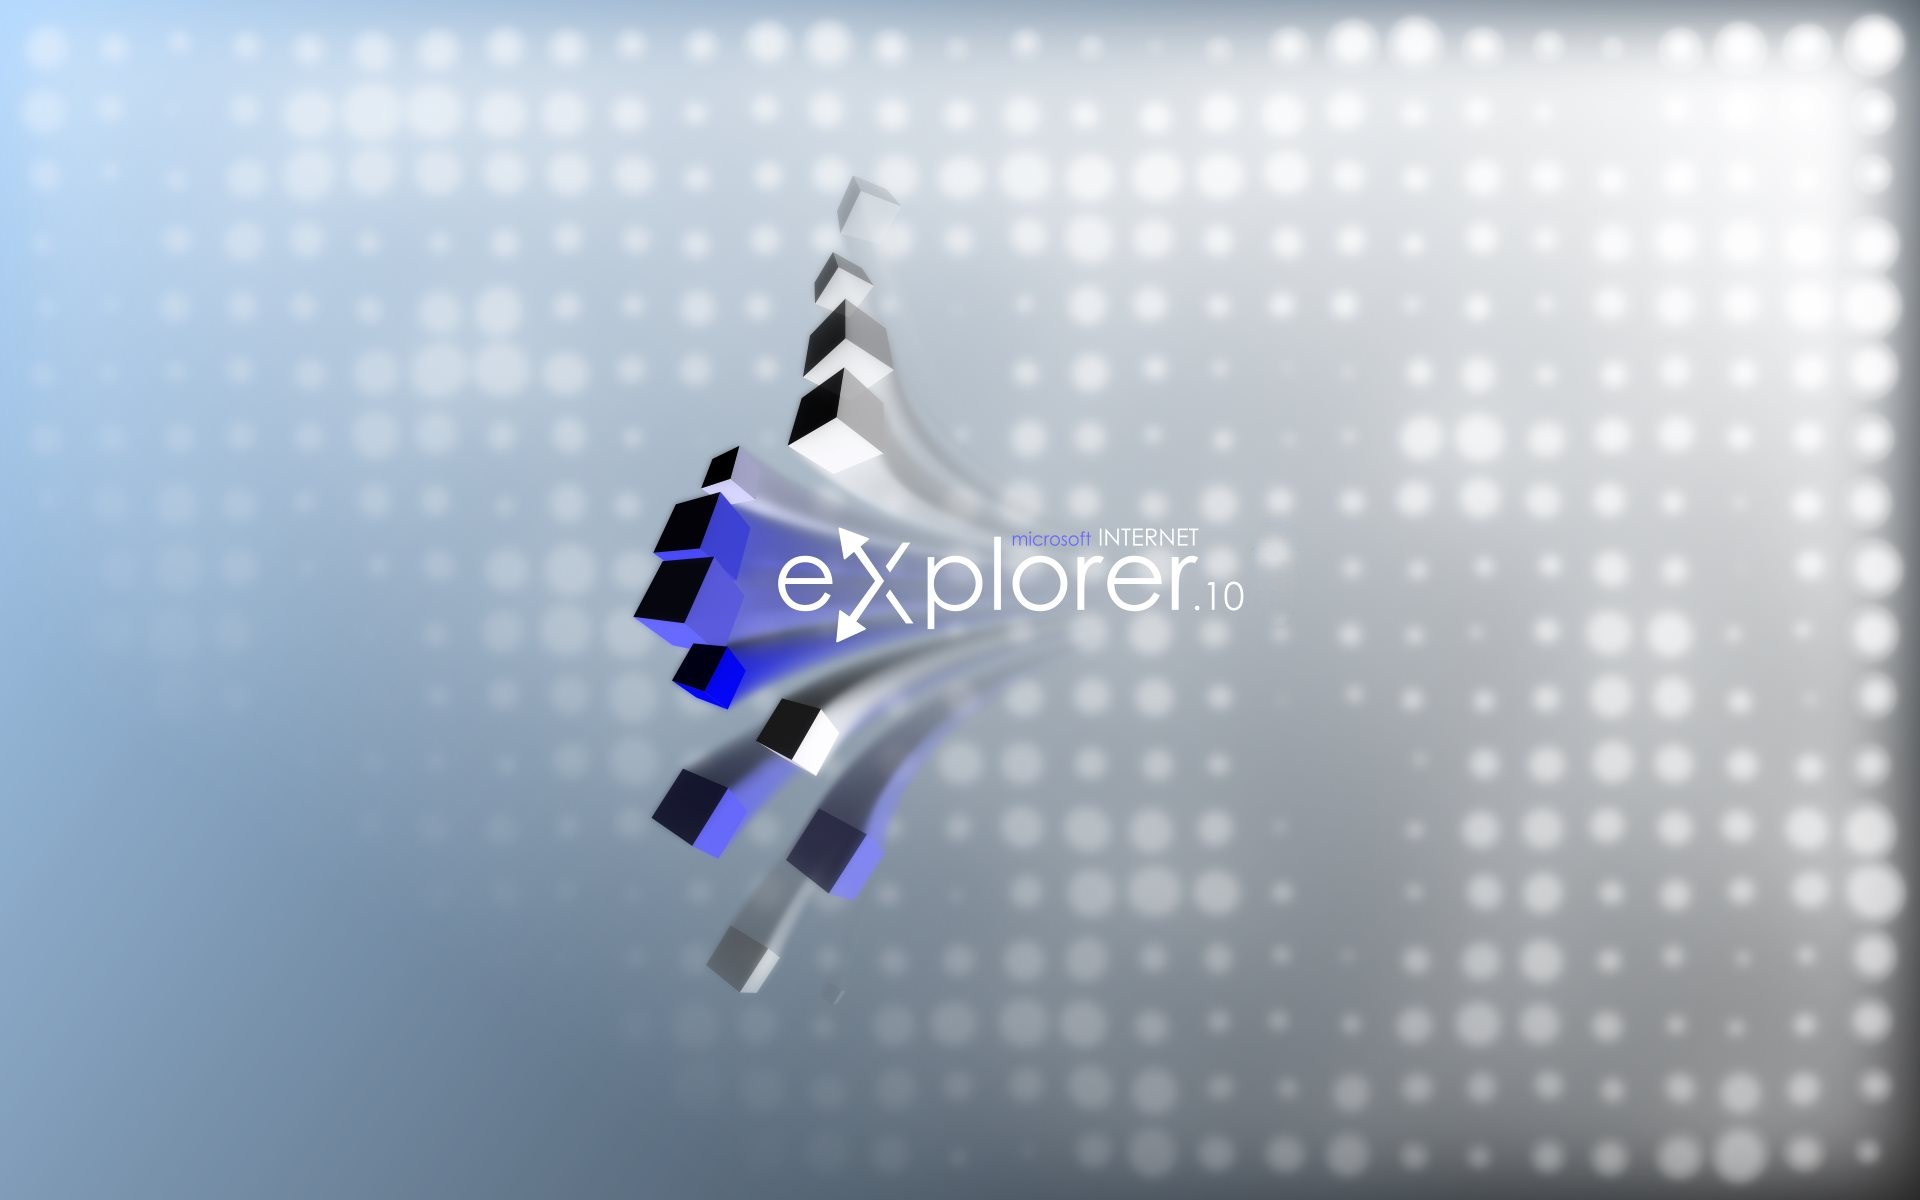 Technology Internet Explorer HD Wallpaper | Background Image